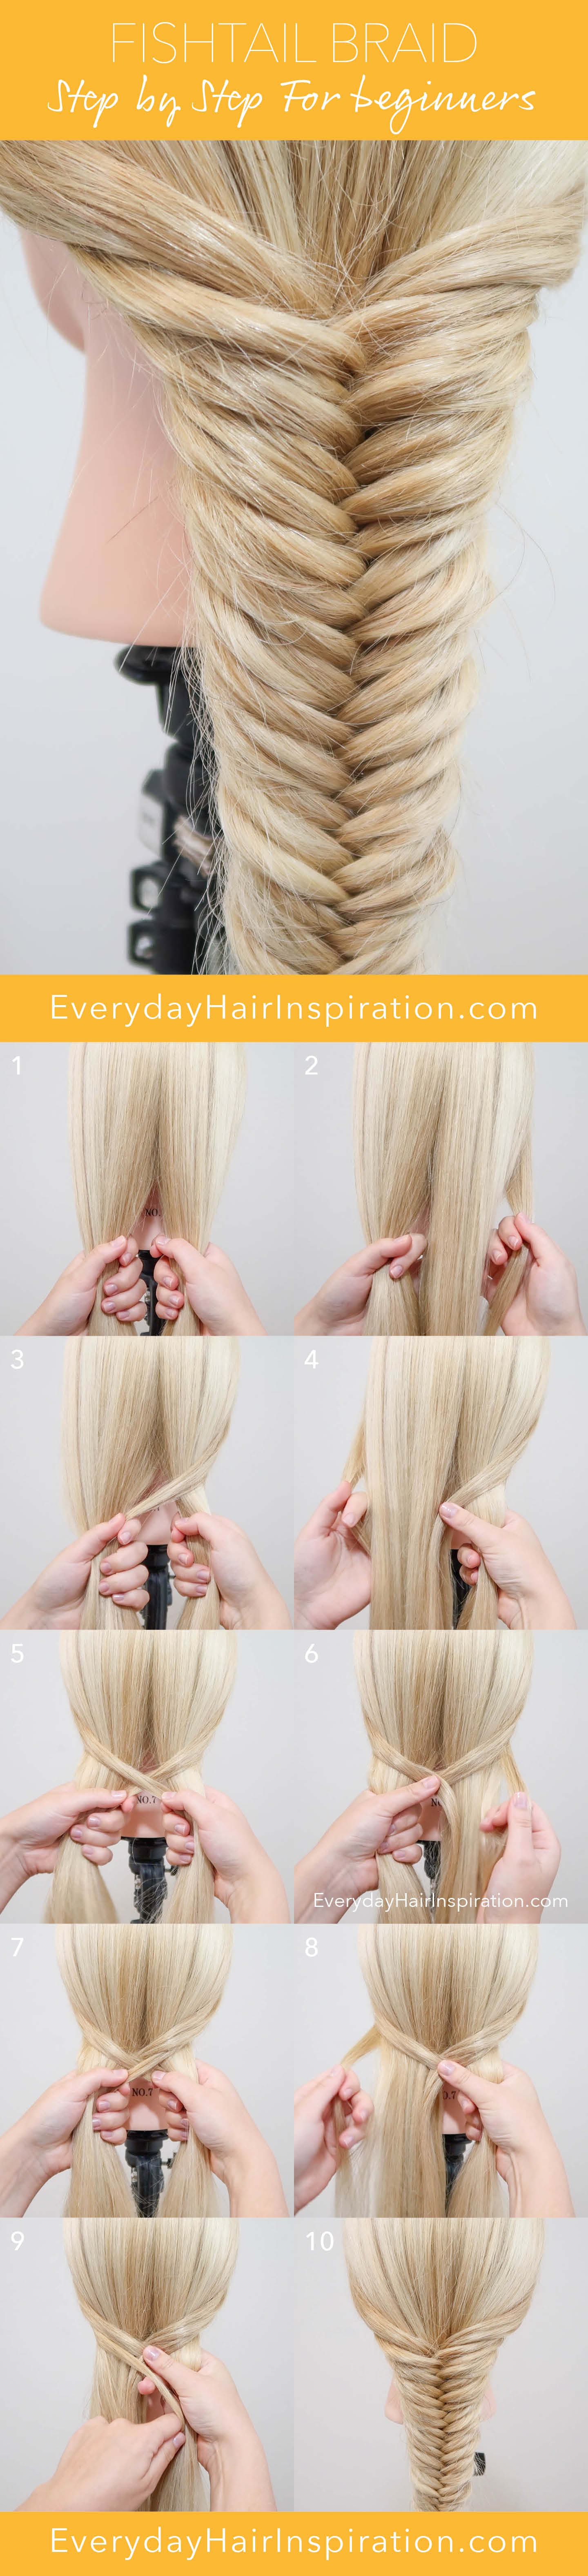 How To Fishtail Braid - Everyday Hair inspiration - FISHTAIL BRAID